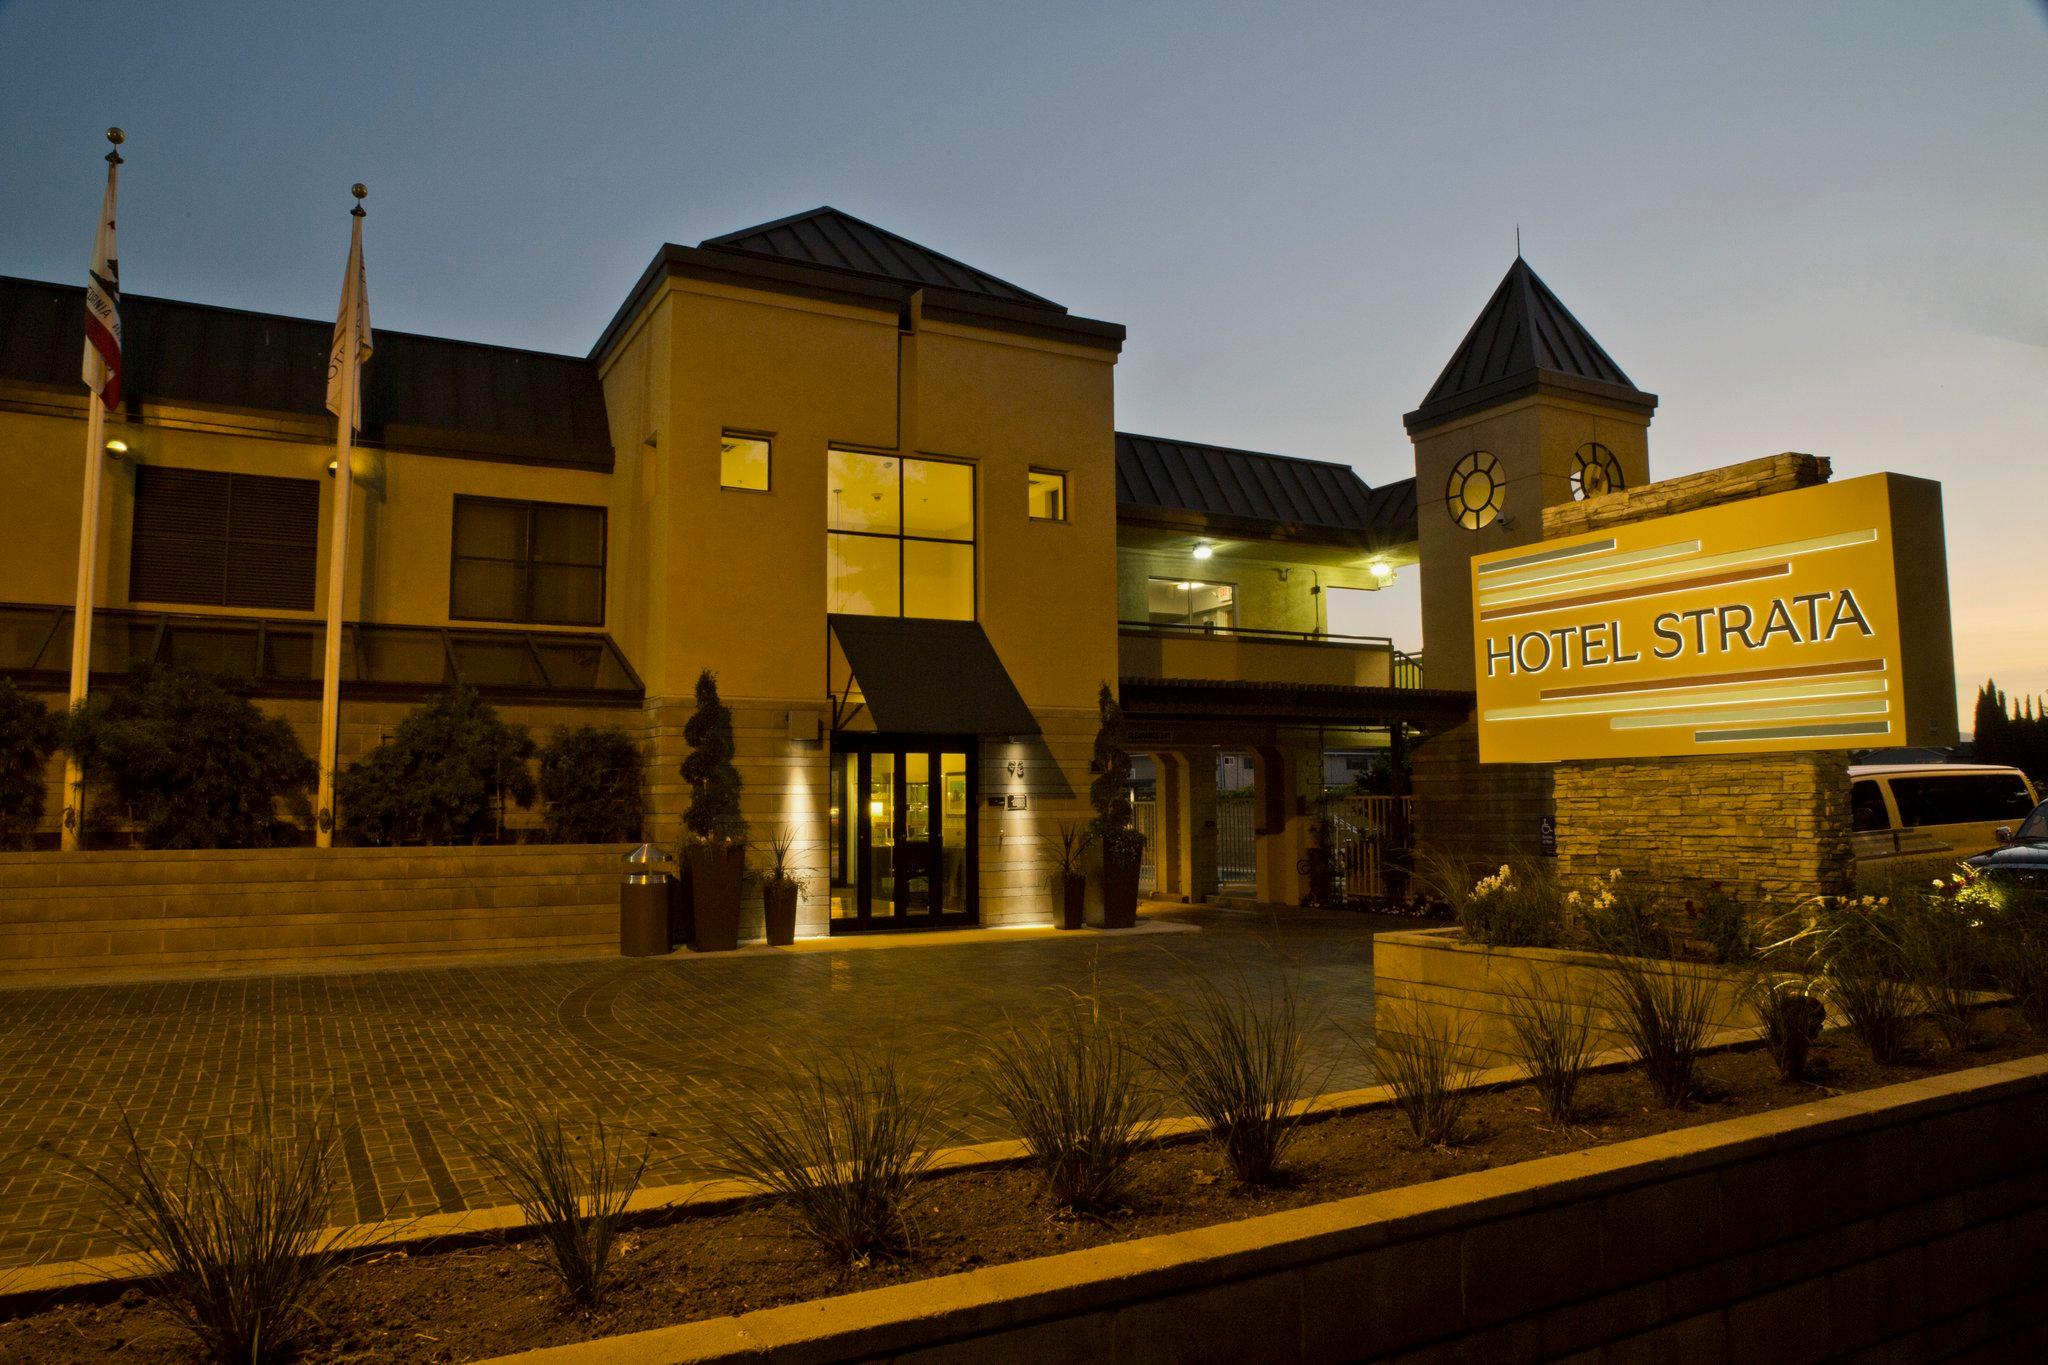 Hotel Strata Mountain View-Town Center in Mountain View, CA